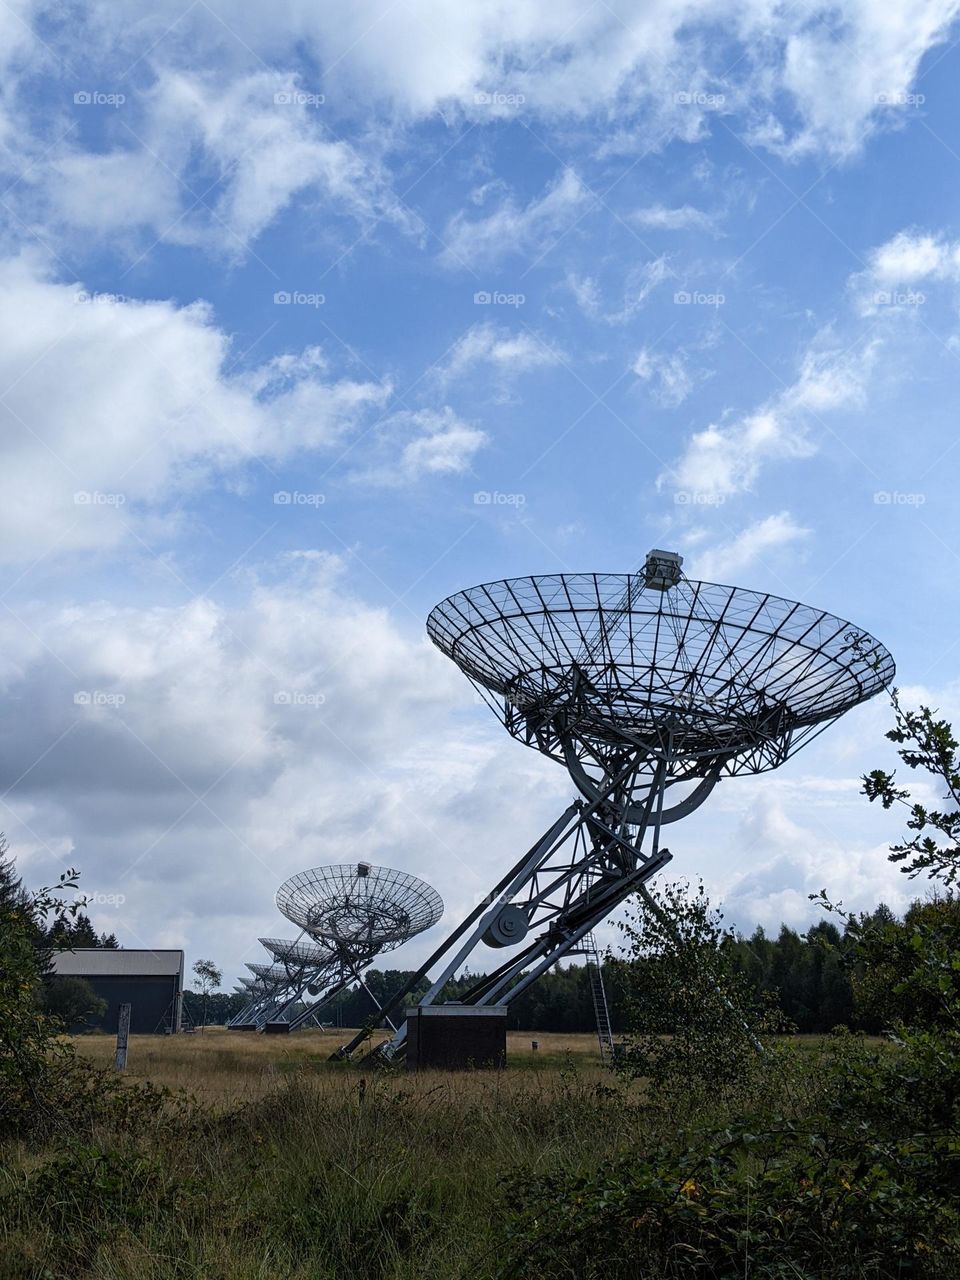 A radio telescope with several dish antennas.